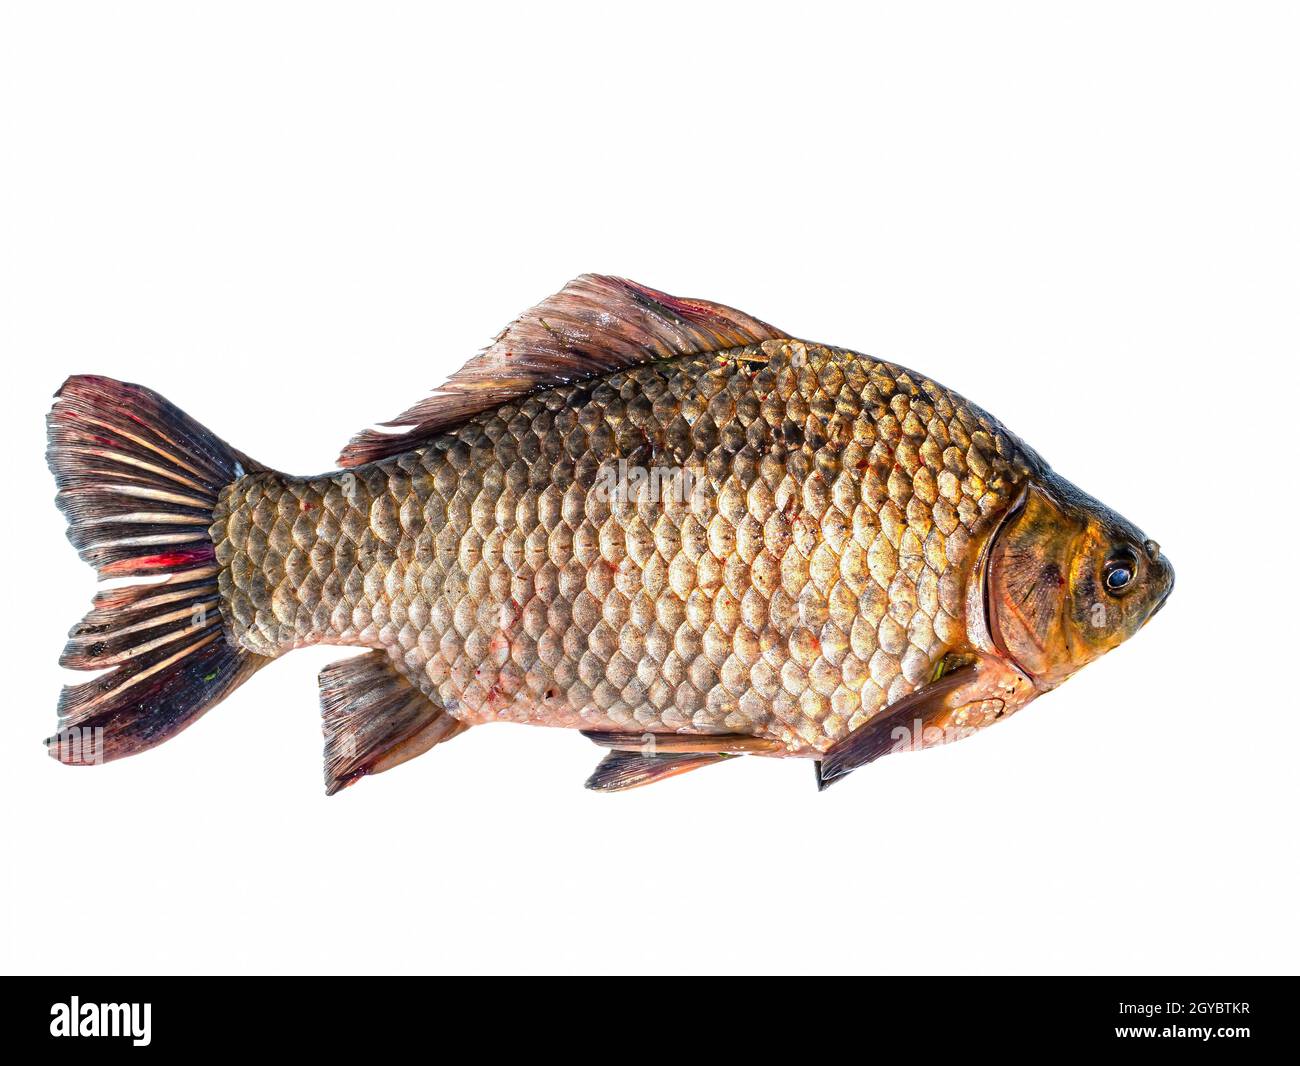 https://c8.alamy.com/comp/2GYBTKR/freshwater-fish-crucian-carp-on-a-white-background-fish-crucian-carp-fishing-catch-fishermans-trophy-fishing-food-white-background-carp-family-2GYBTKR.jpg